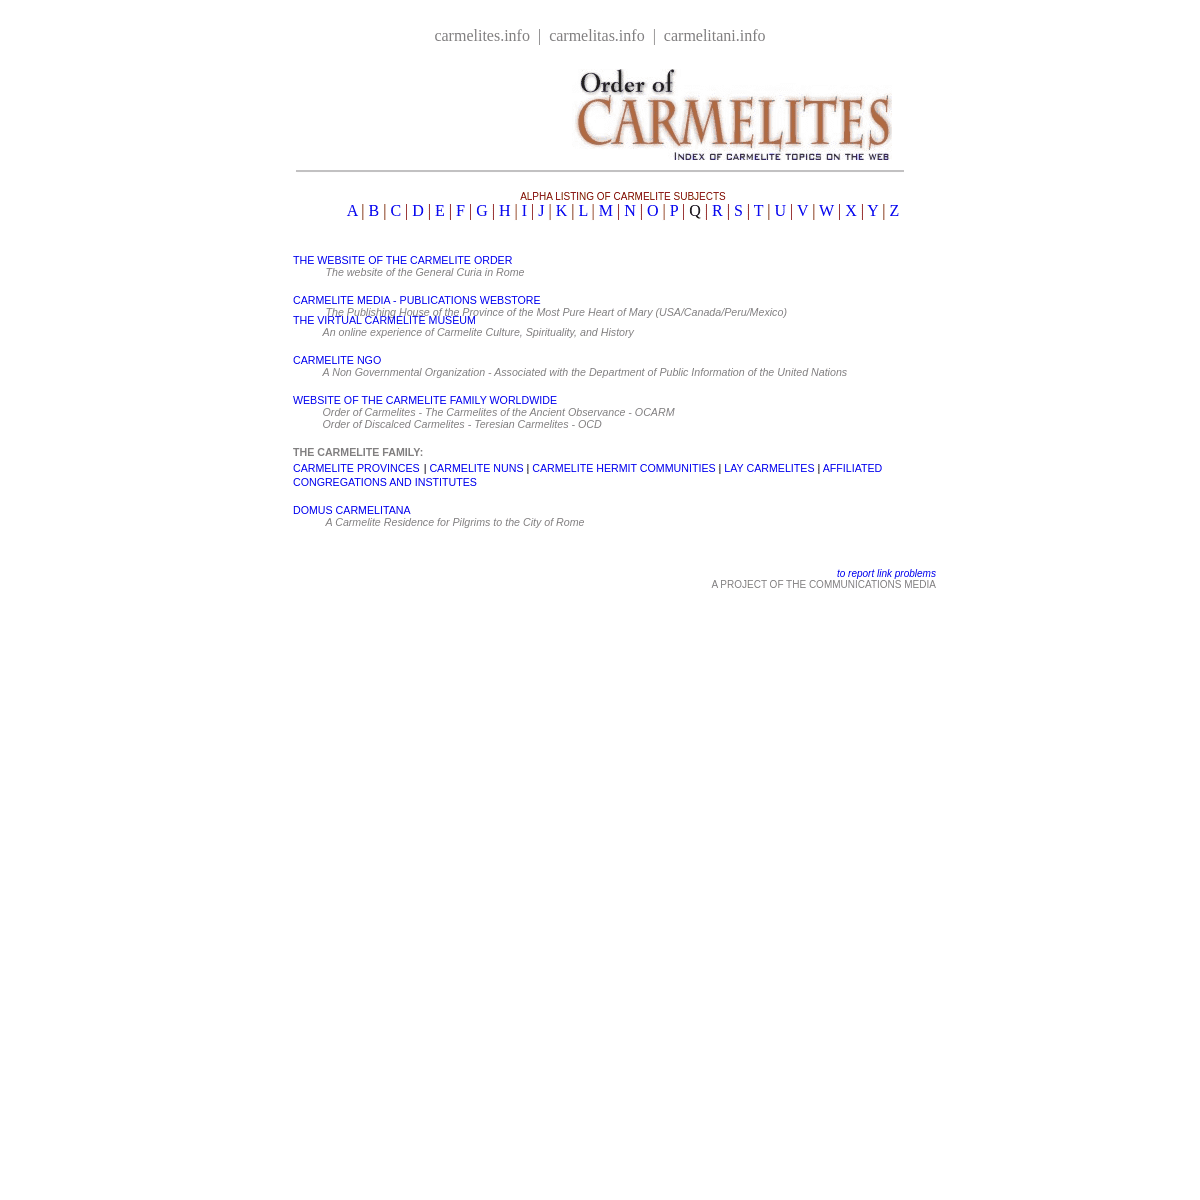 A complete backup of https://carmelites.info